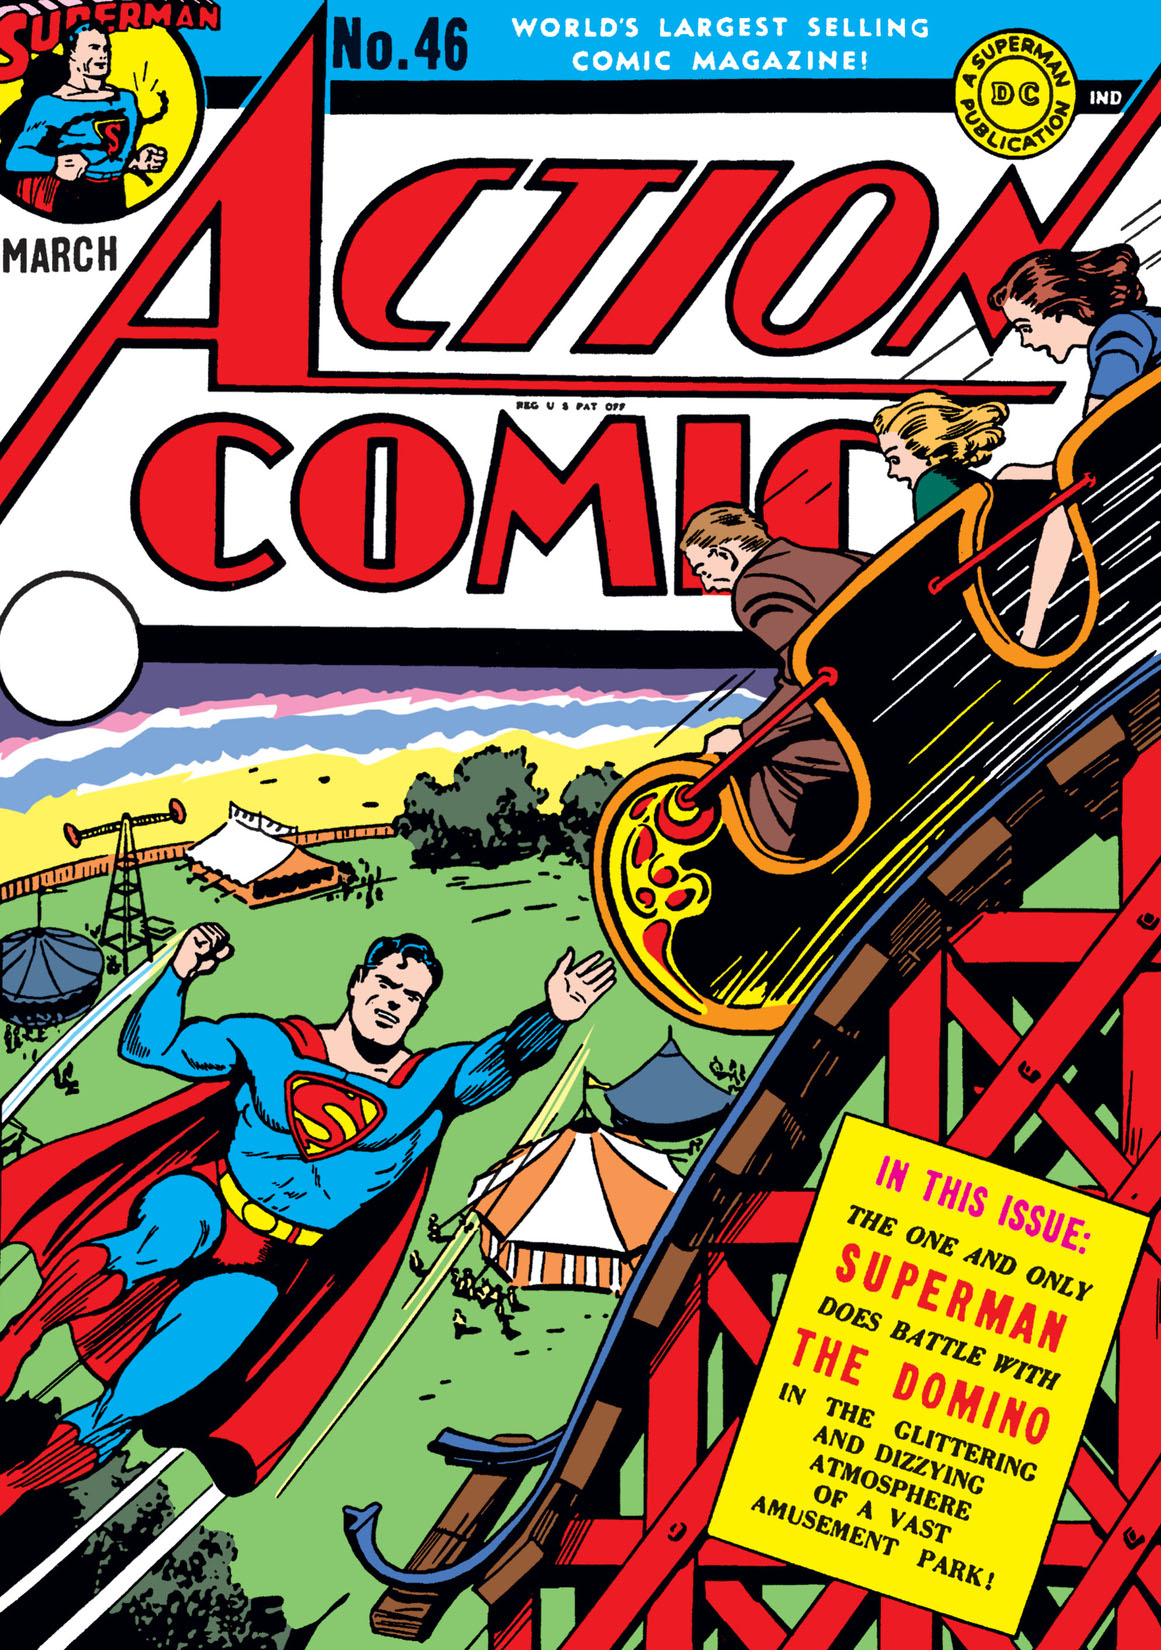 Action Comics (1938-) #46 preview images